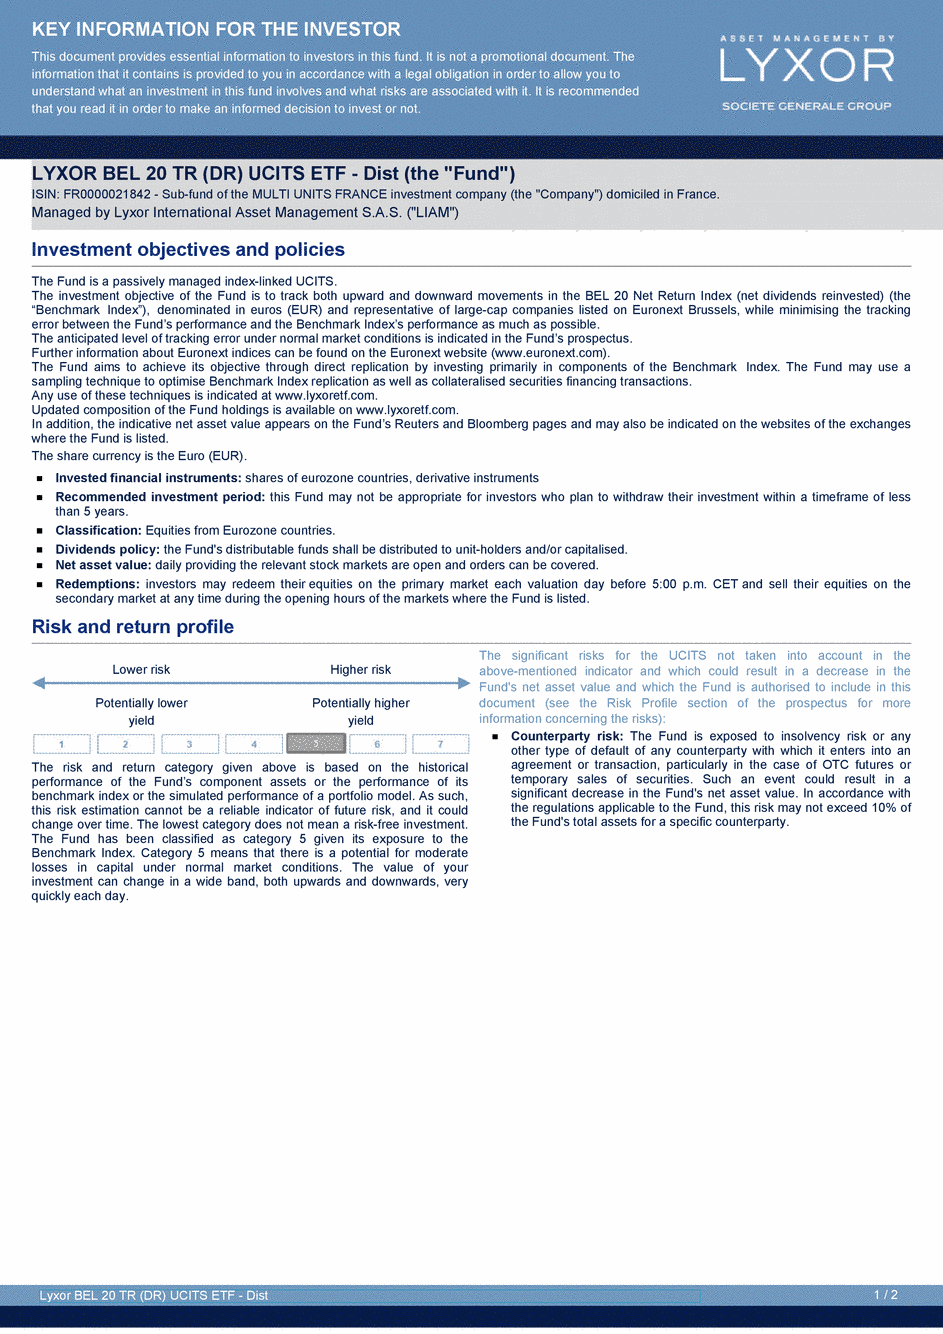 DICI Lyxor BEL 20 TR (DR) UCITS ETF - Dist - 19/02/2020 - Anglais